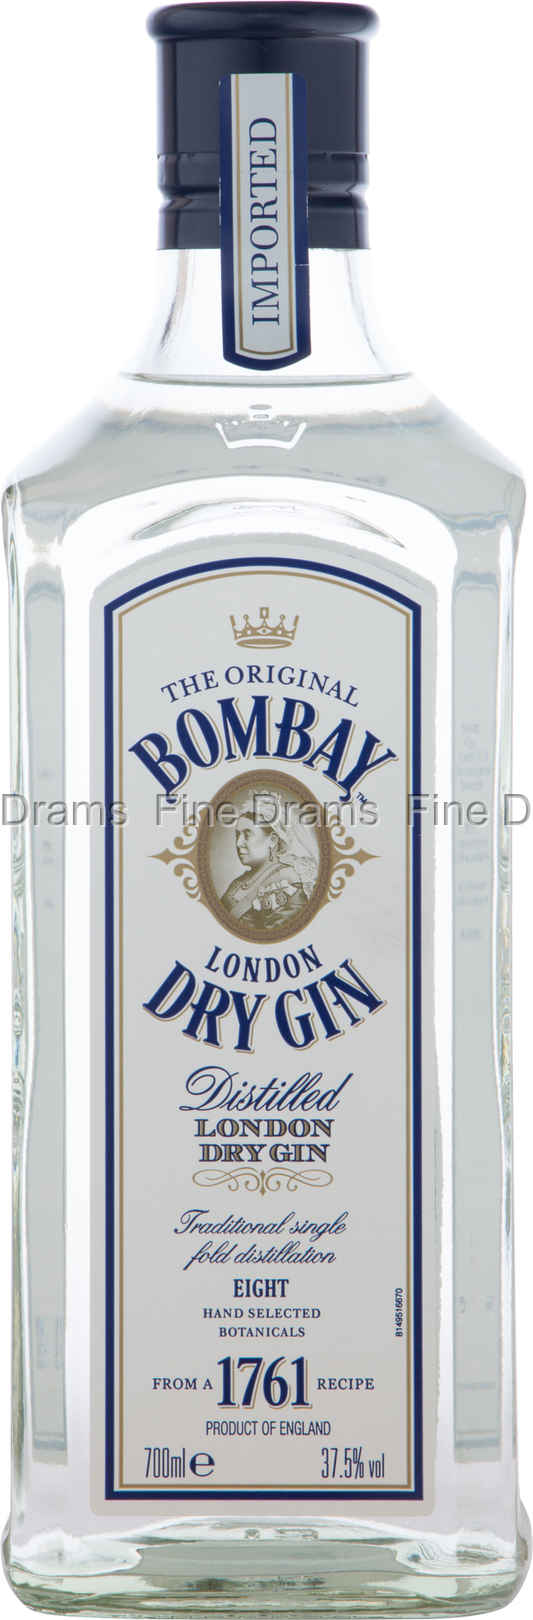 Bombay Original London Gin Dry